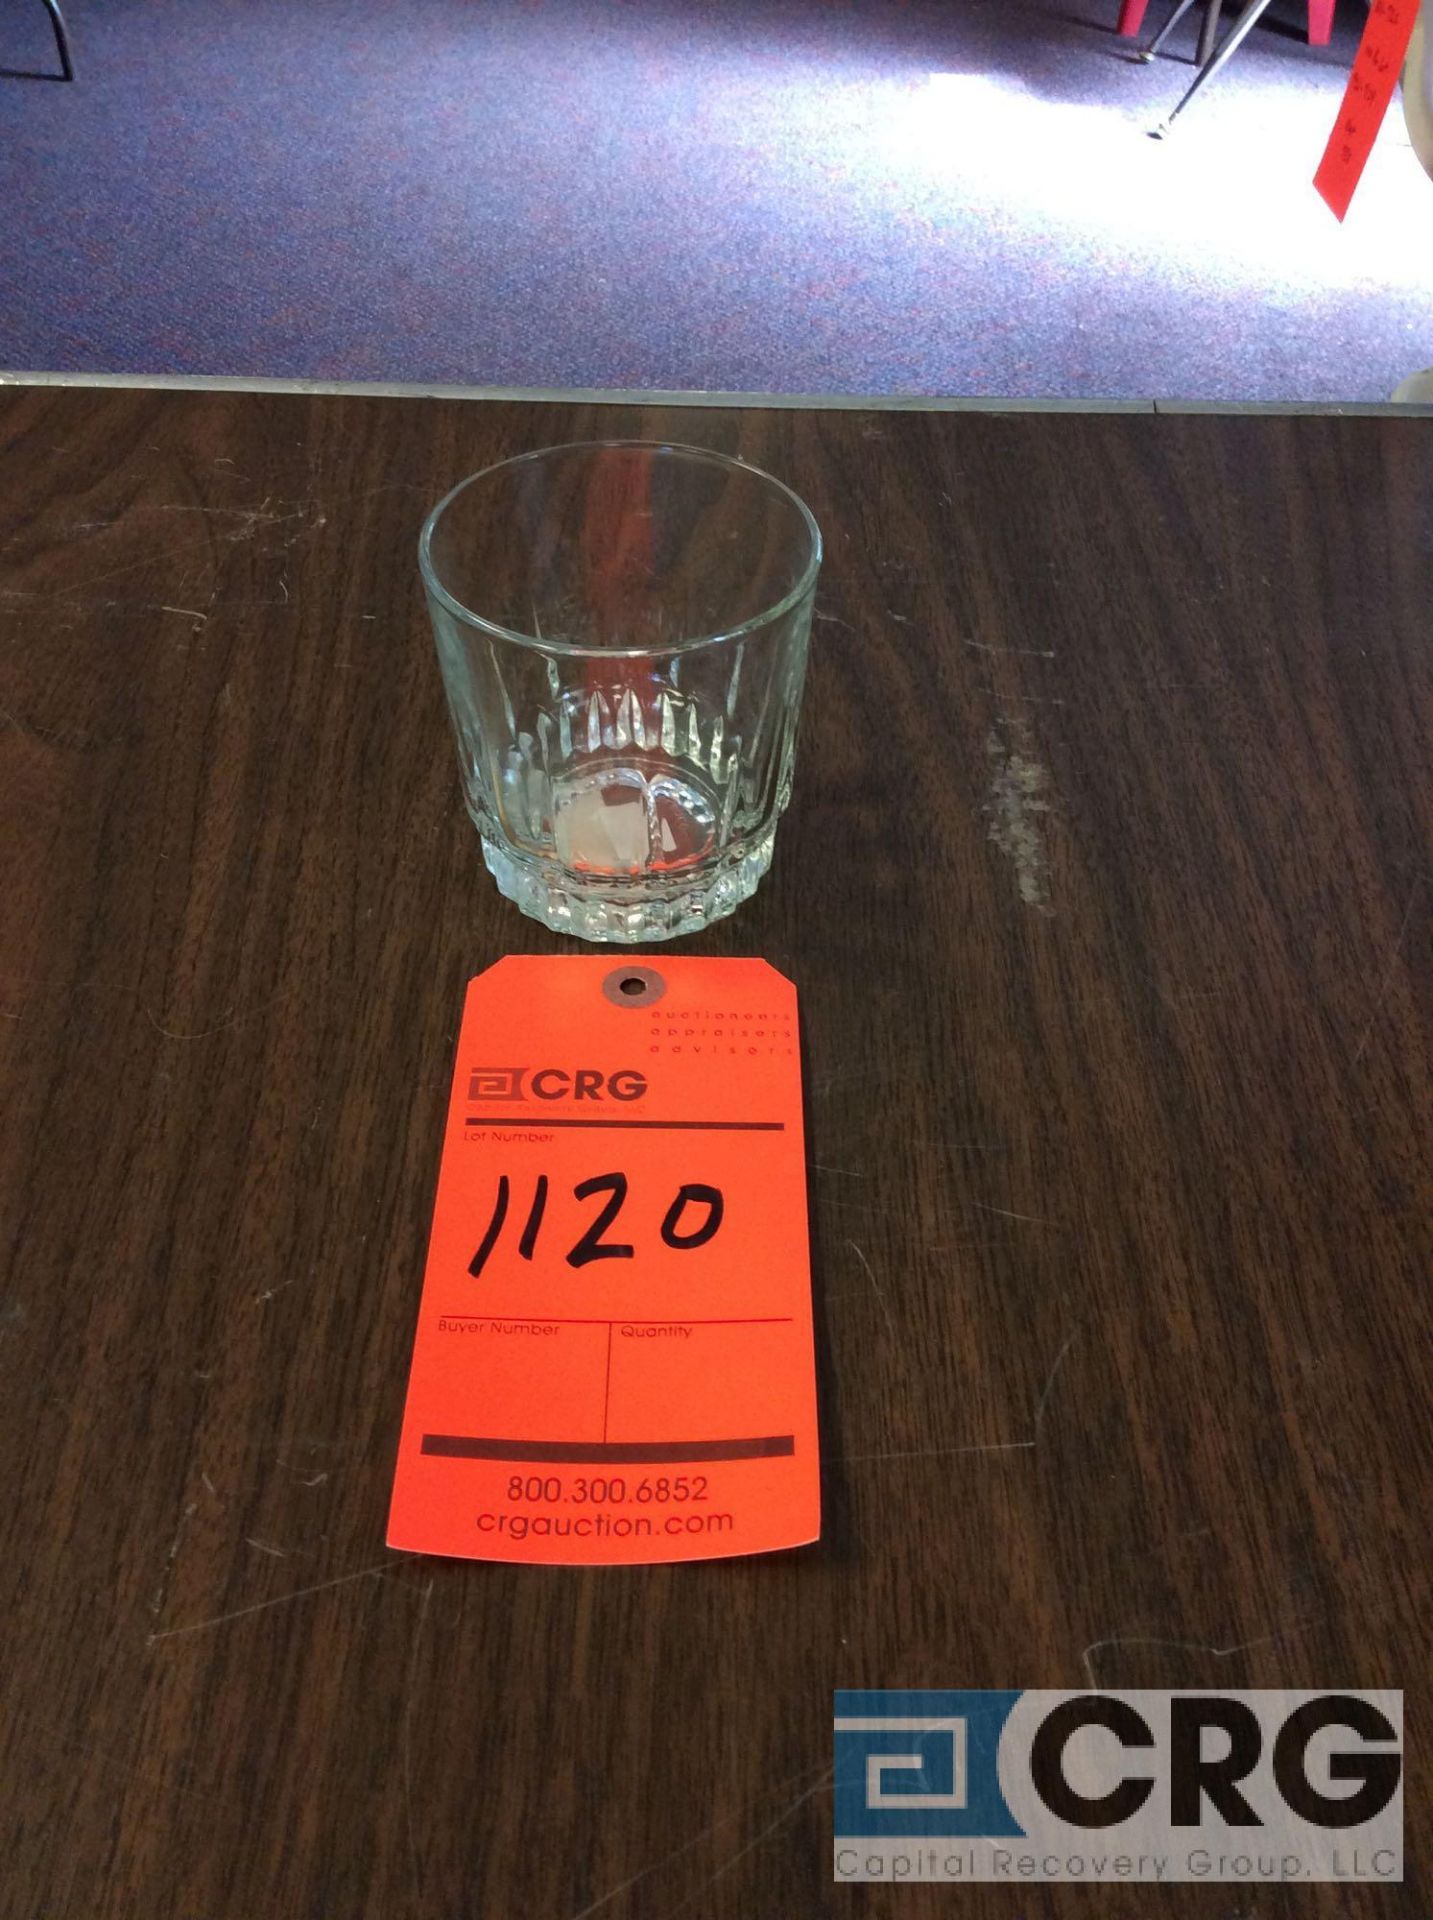 Lot of (612) 10.5 oz. lancer rocks glasses, with (26) racks, add'l $5 fee per rack